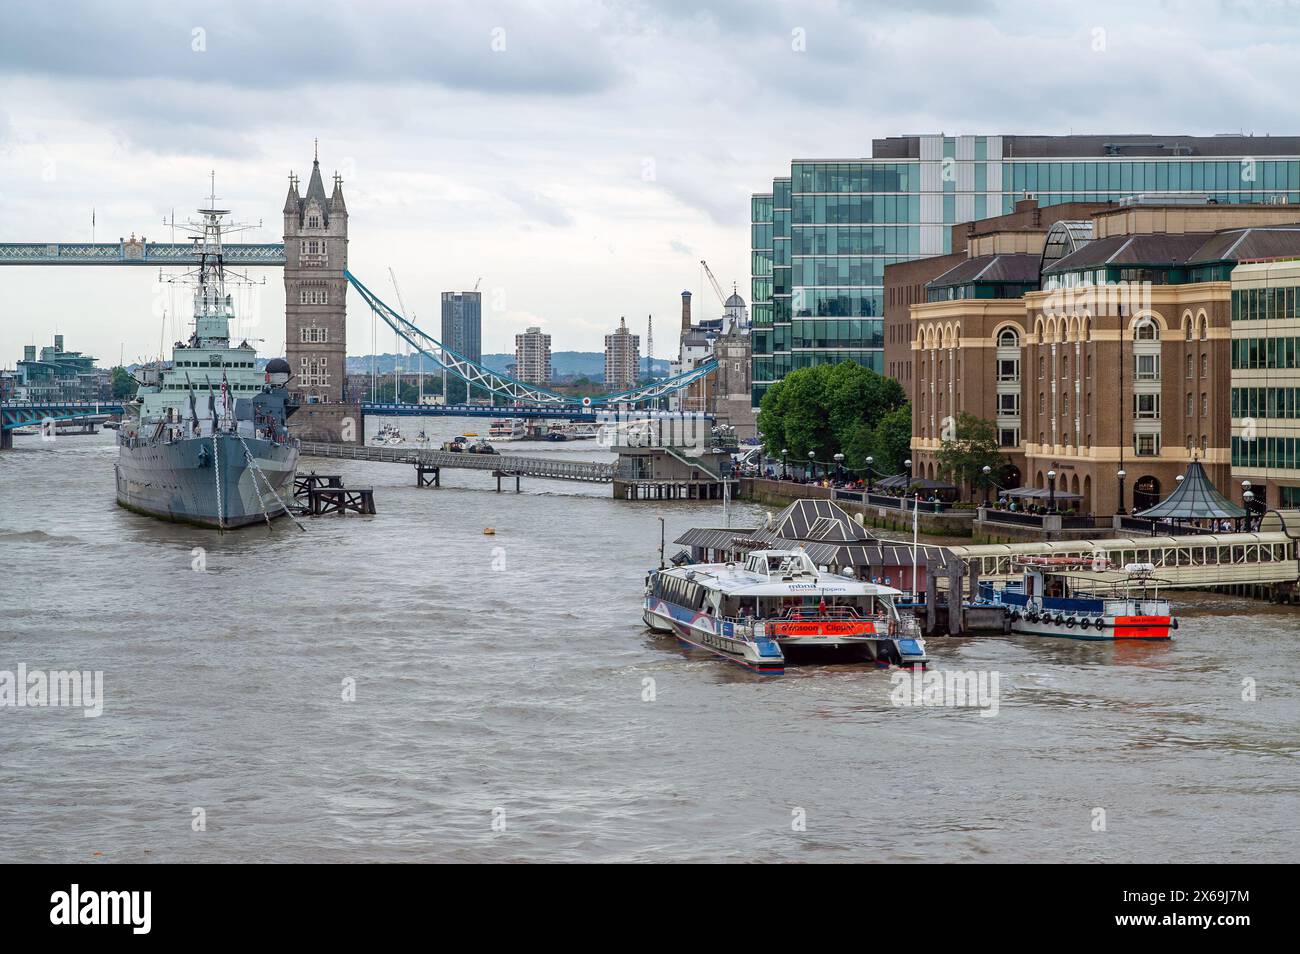 Inghilterra Regno Unito; fiume Tamigi; London Bridge City Pier; HMS Belfast; Tower Bridge; storico incrociatore della Royal Navy classe Town; historischer Kreuzer Foto Stock